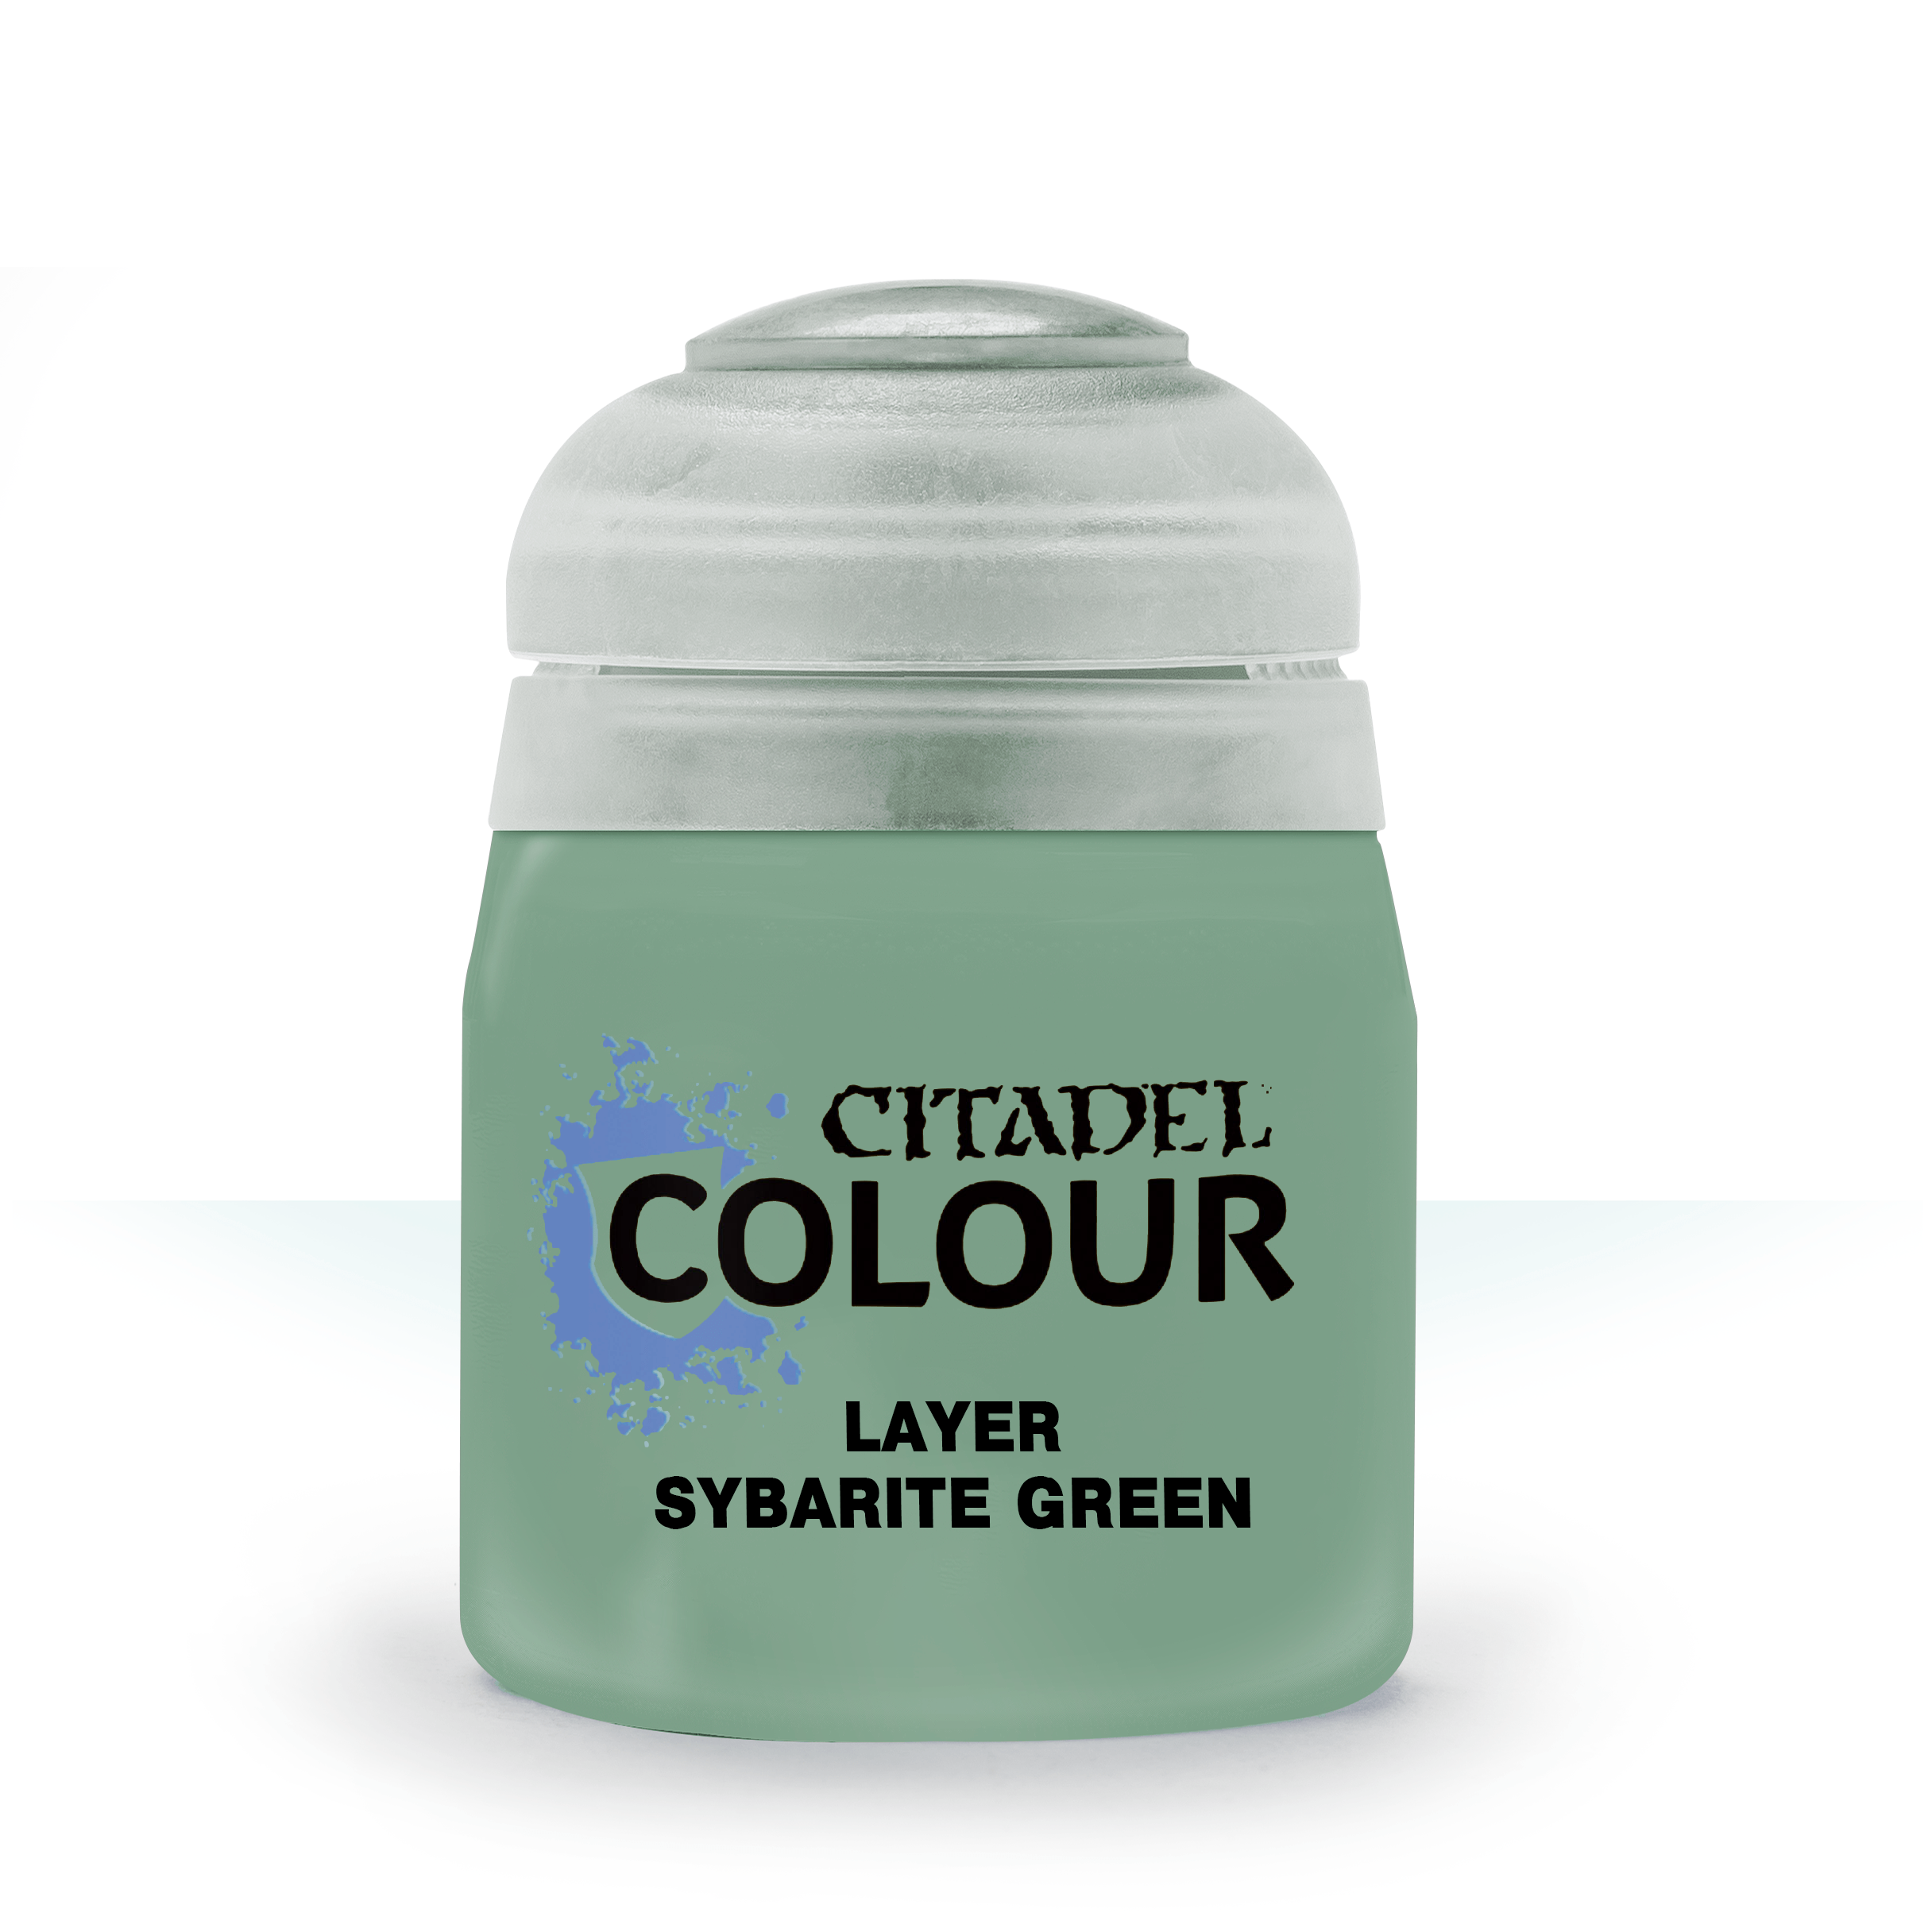 Layer: Sybarite Green